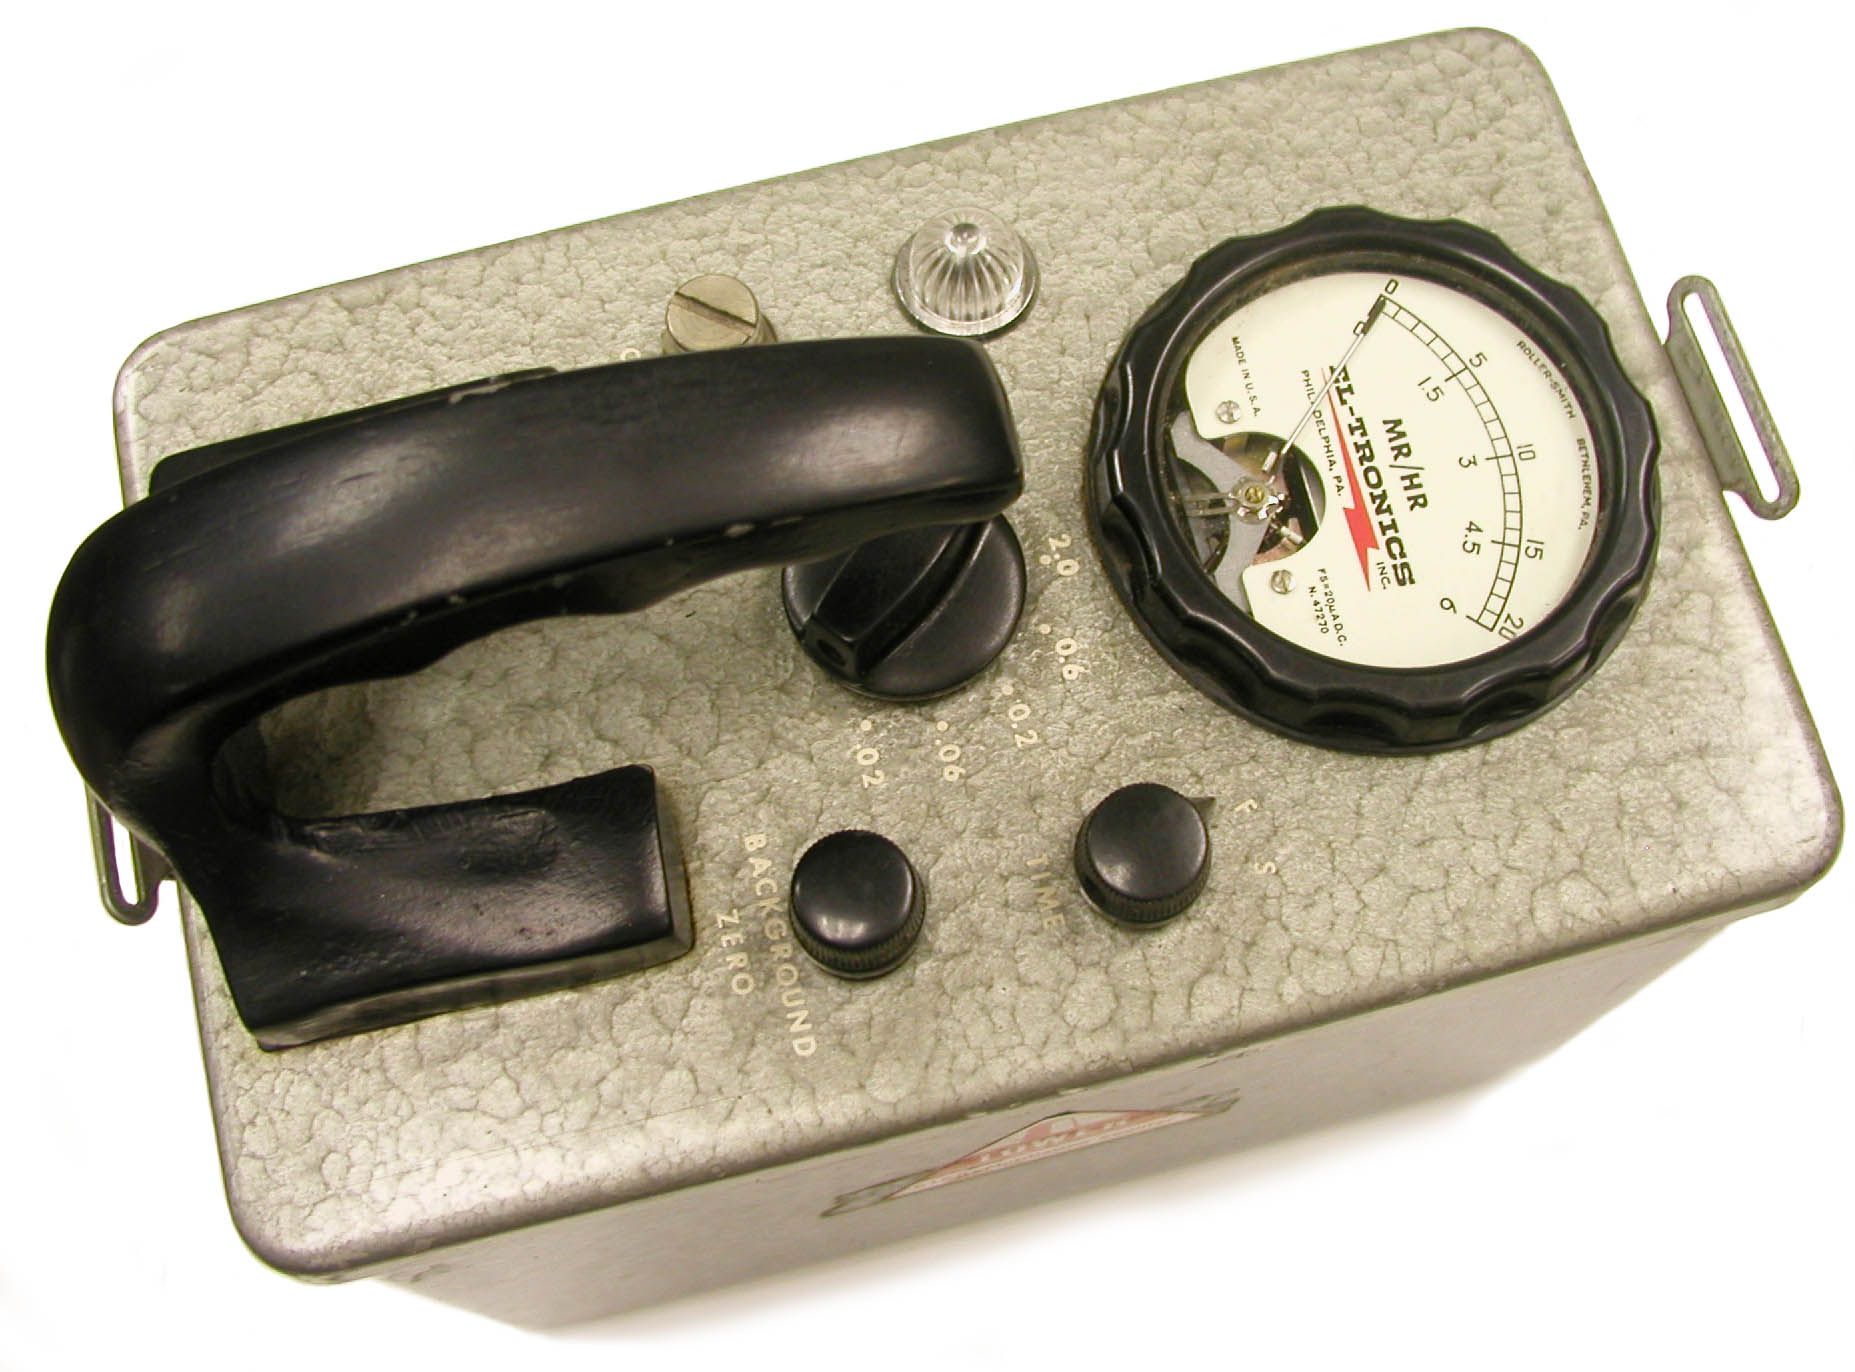 Sears Tower Model 6160 Gamma Scintillator (ca. 1955-1960)